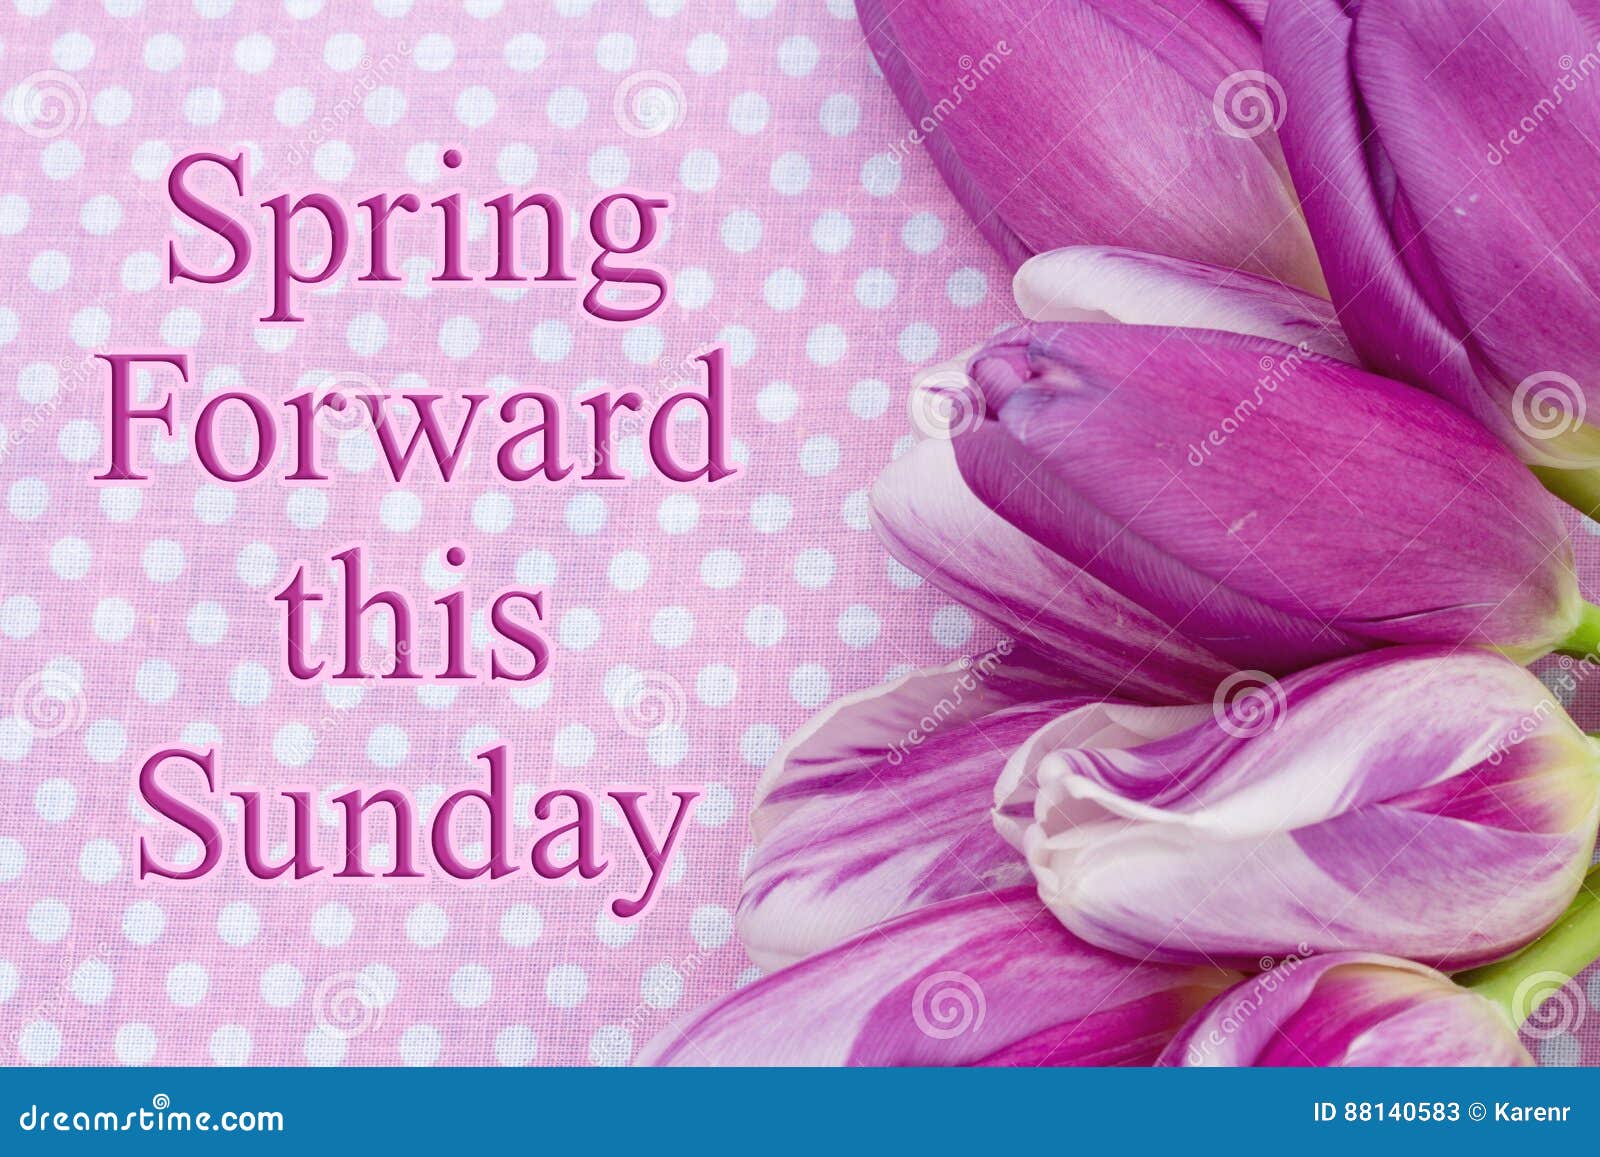 spring forward message